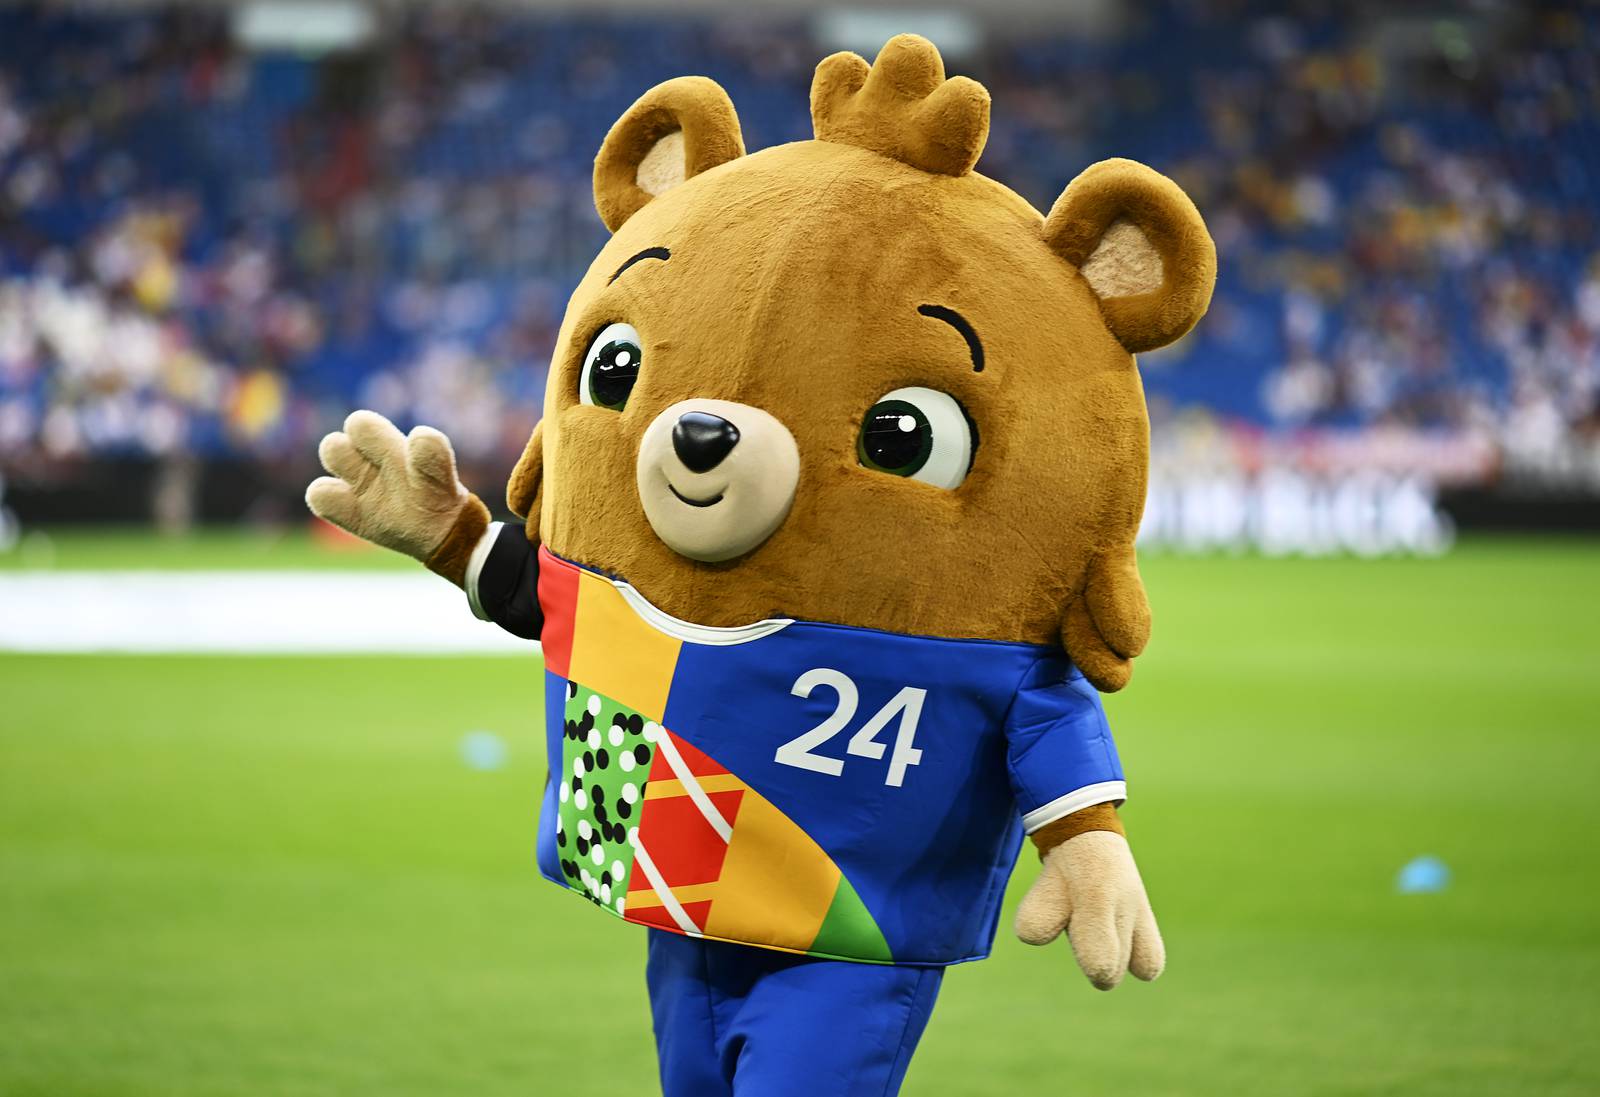 Uefa invites fans to pick name for Euro 2024 mascot